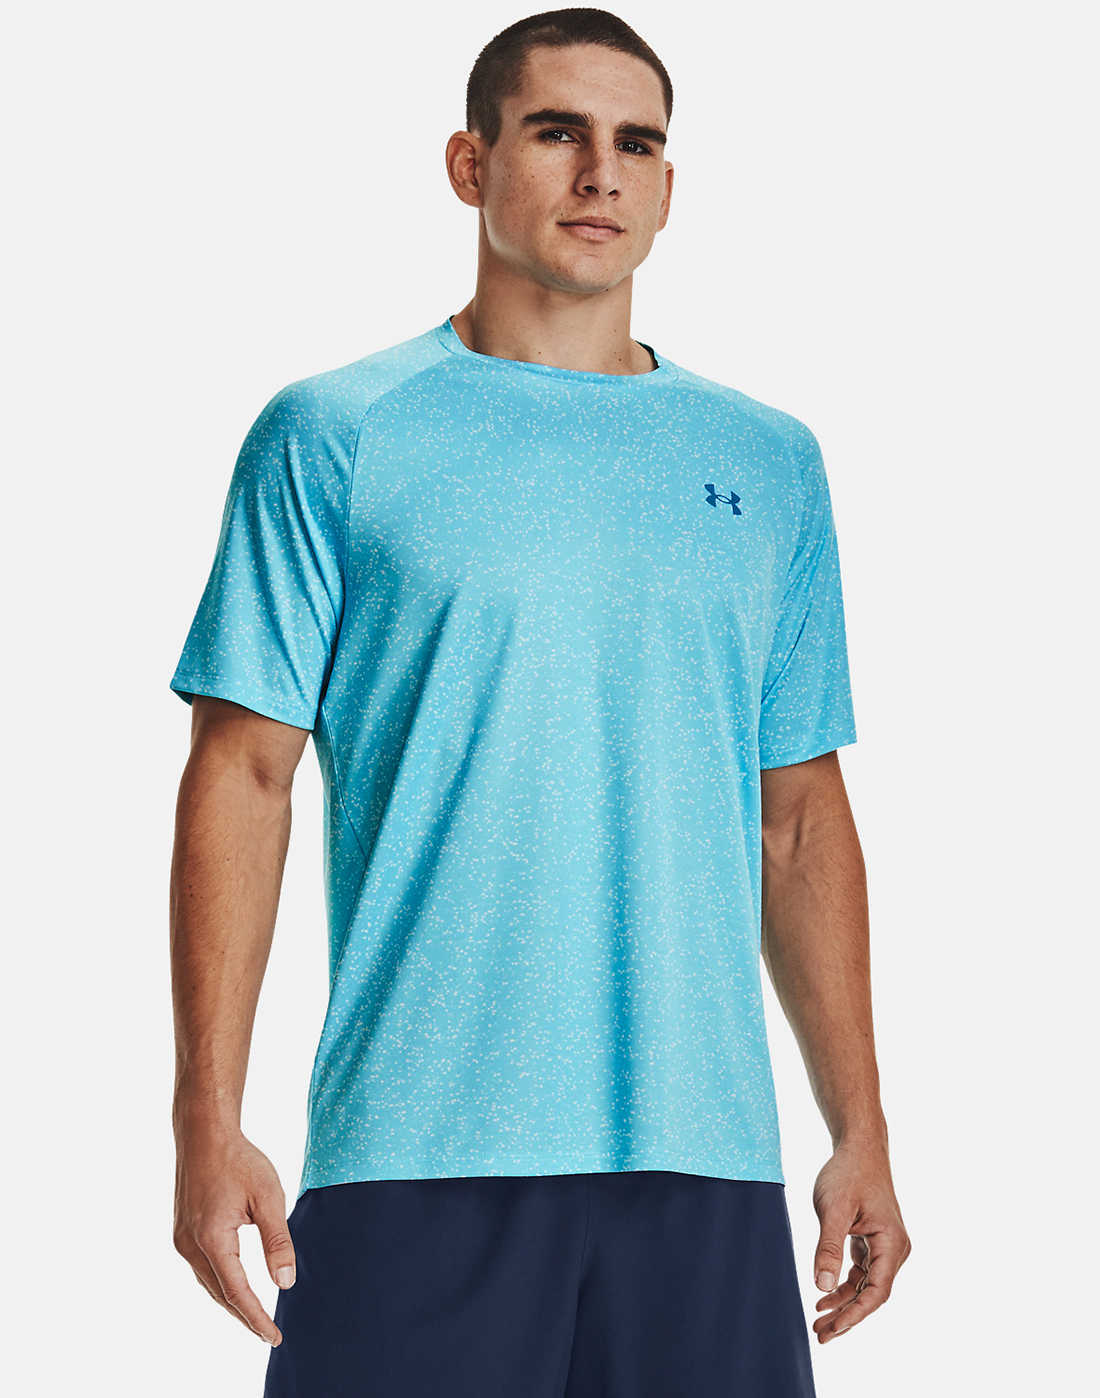 Under Armour Mens Tech 2.0 Nova T-Shirt - Blue | Life Style Sports UK